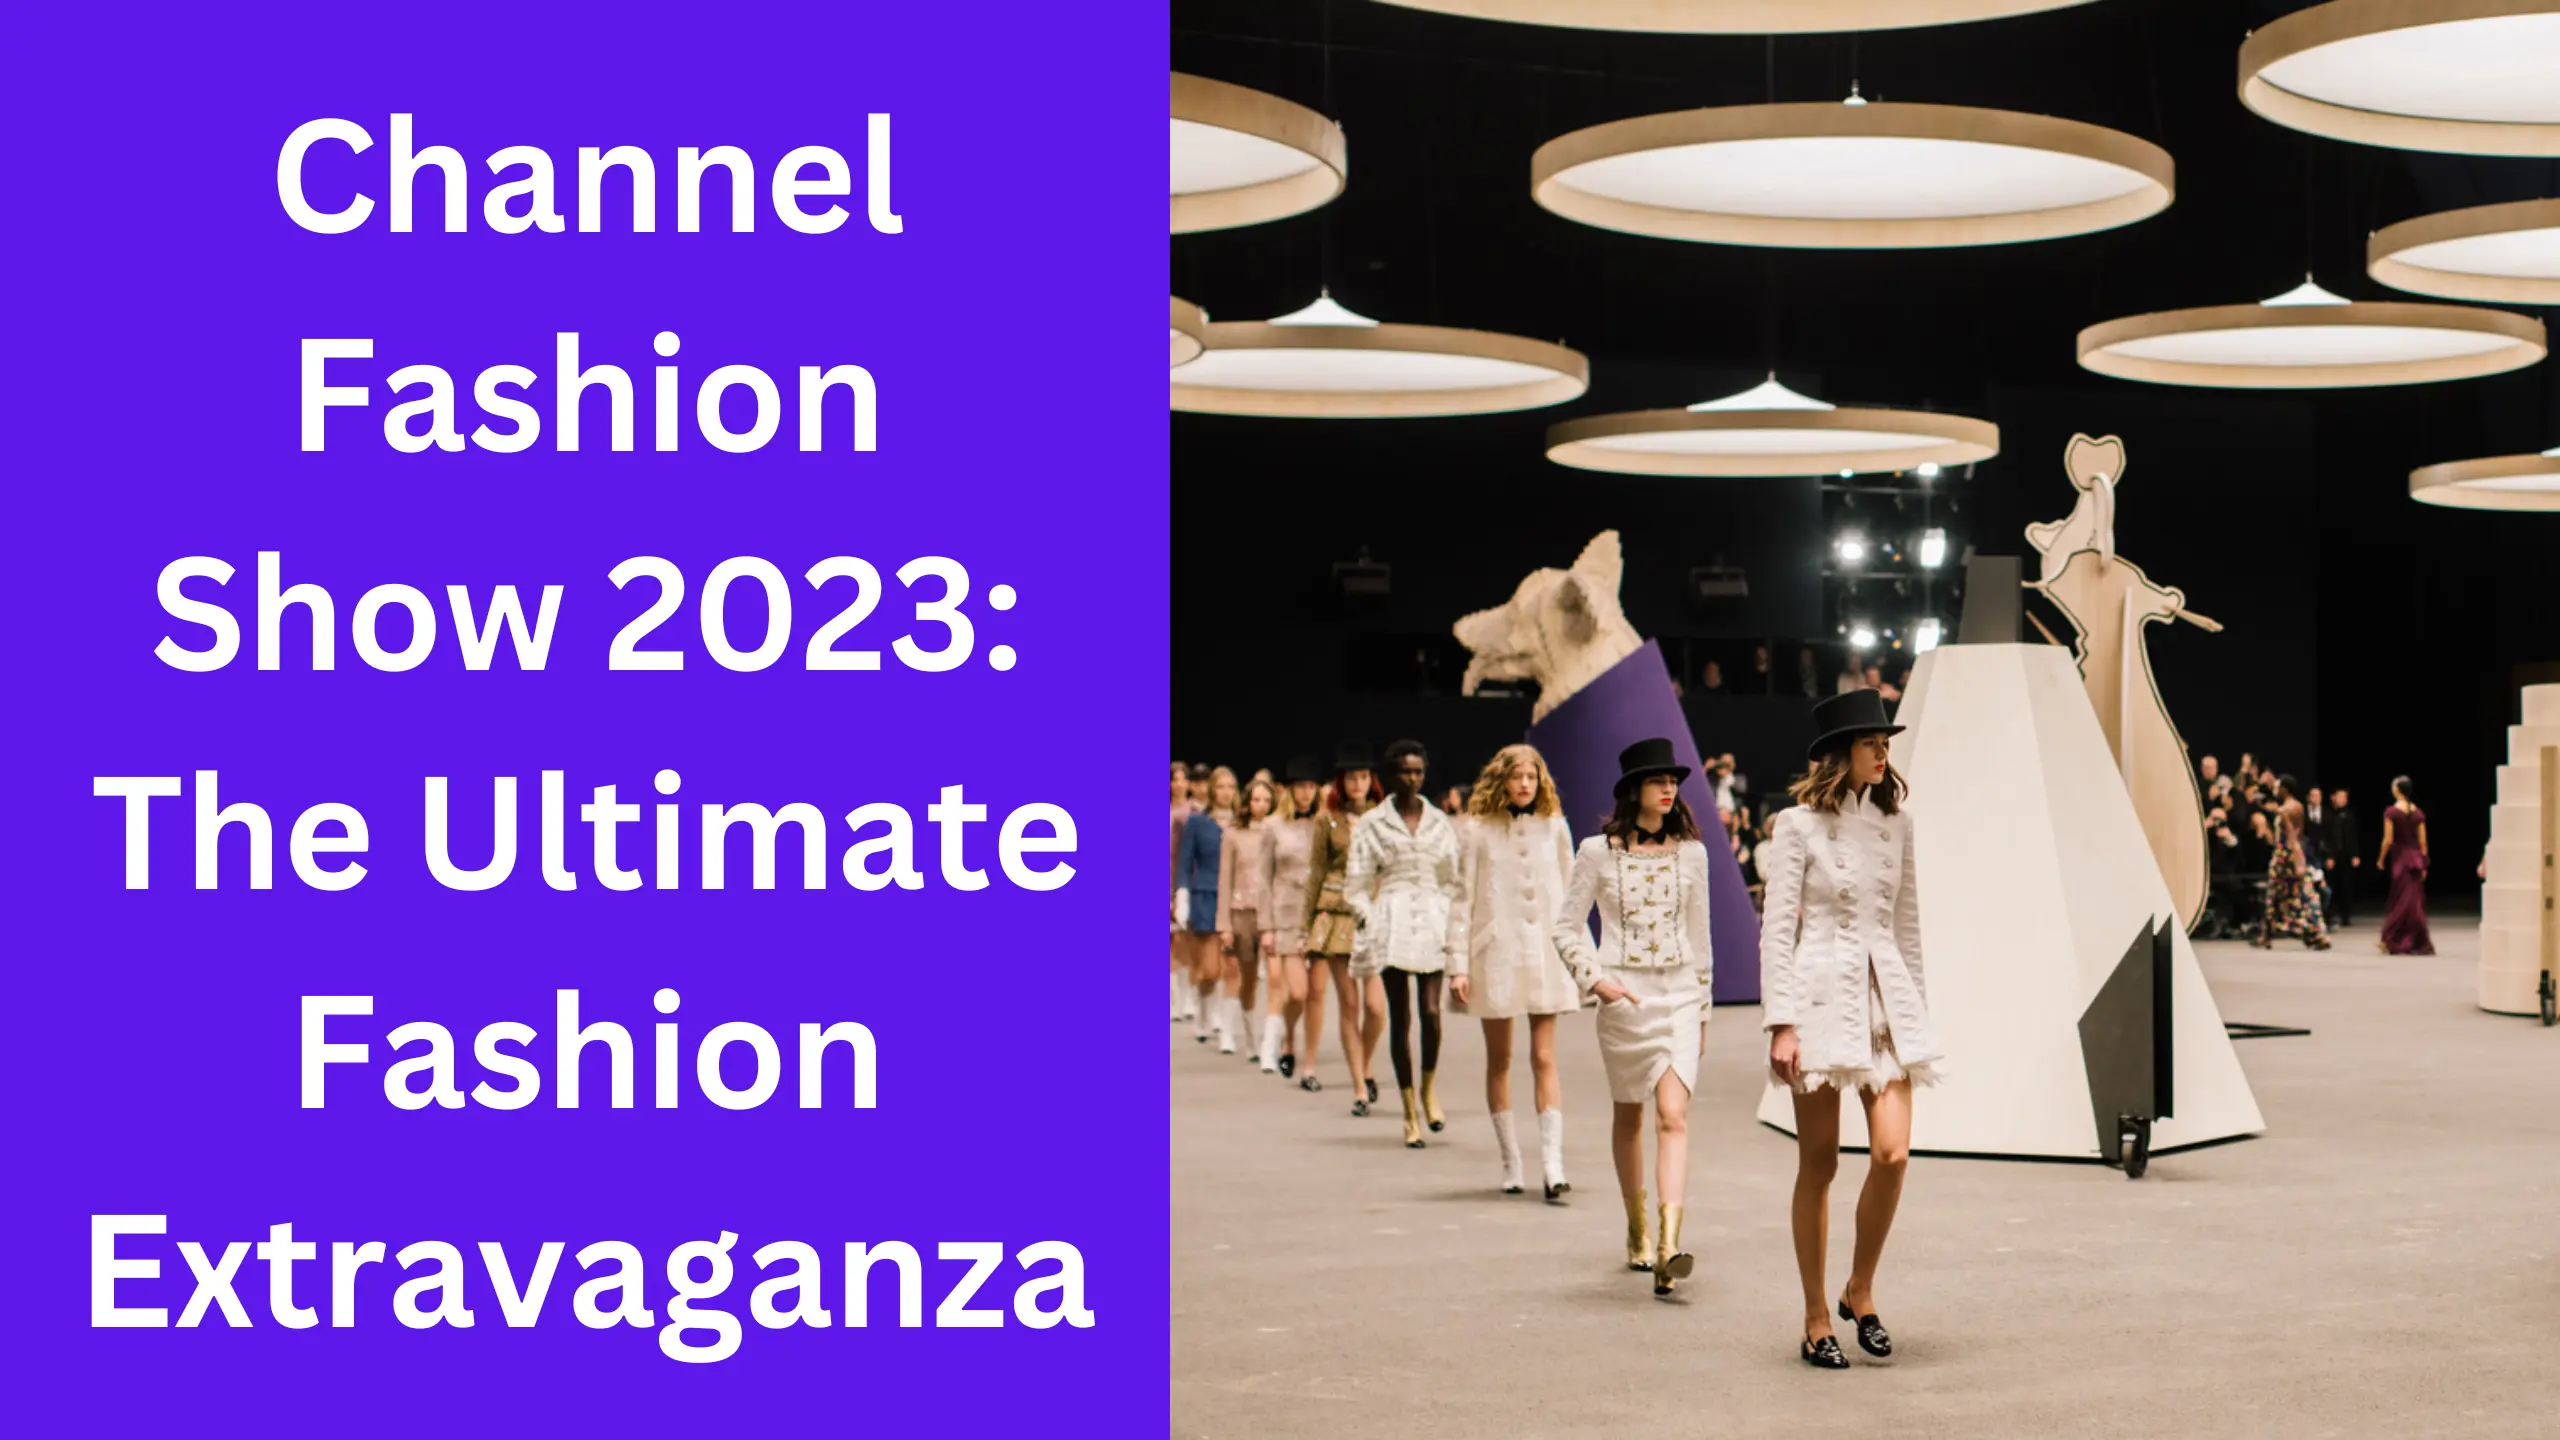 Channel Fashion Show 2023 The Ultimate Fashion Extravaganza